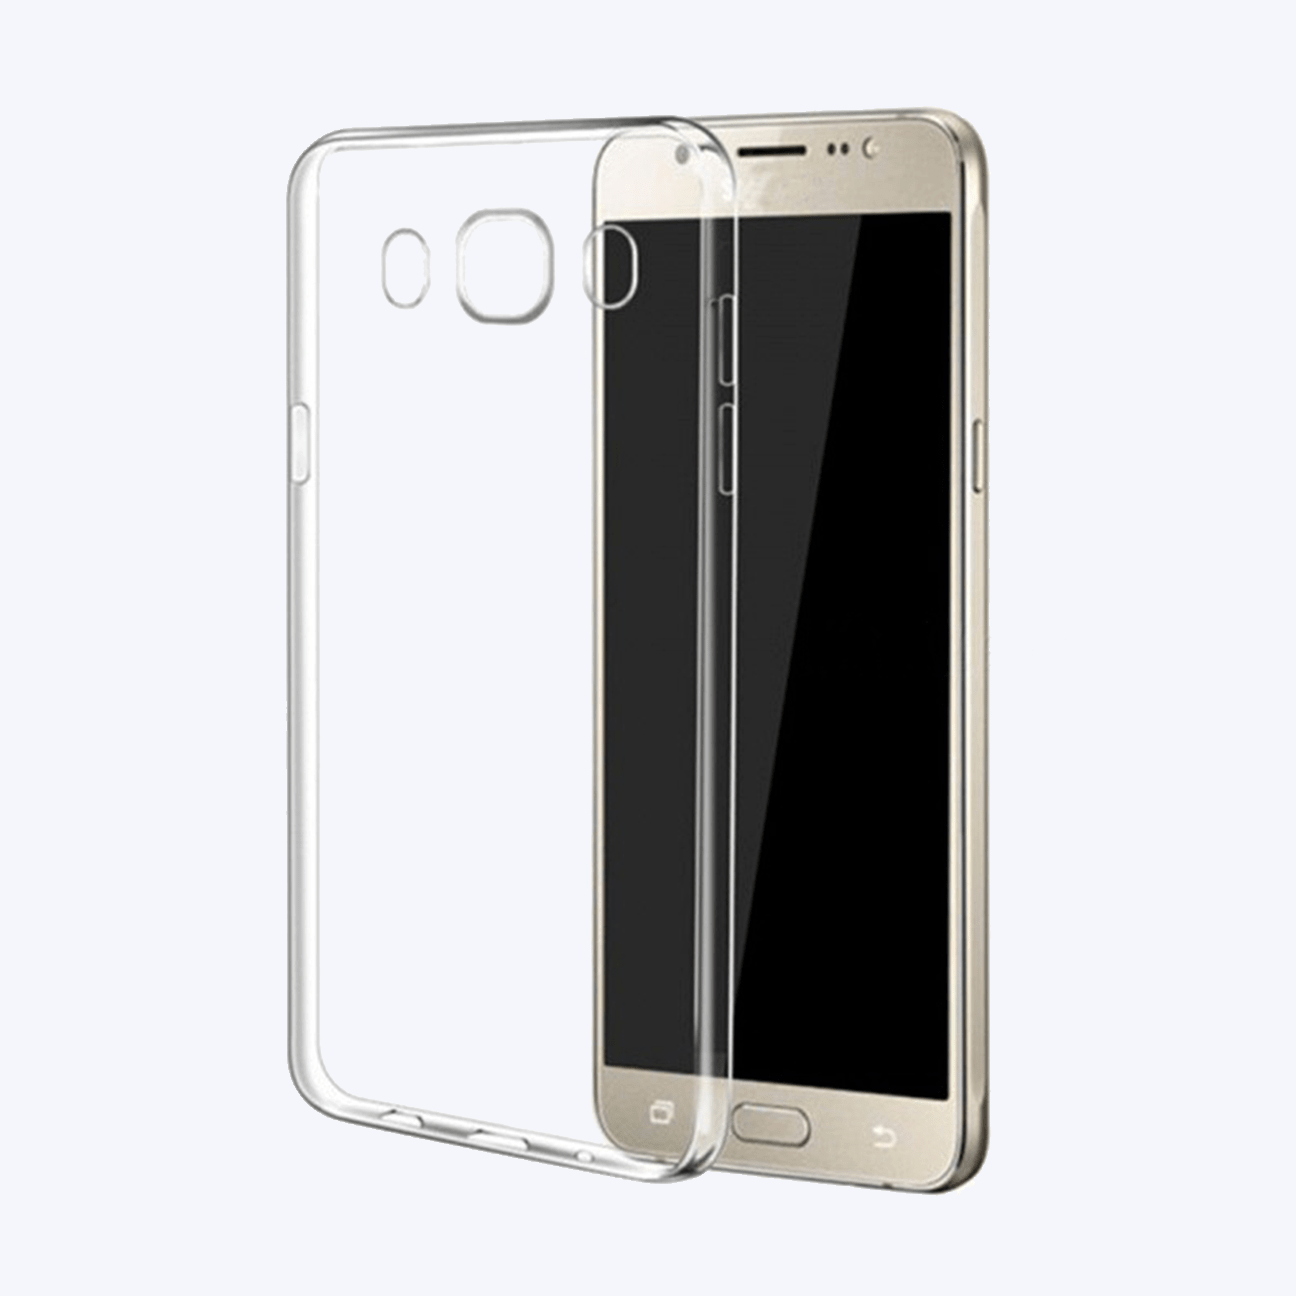 Samsung Galaxy J5 (2016) Transparent Back Cover